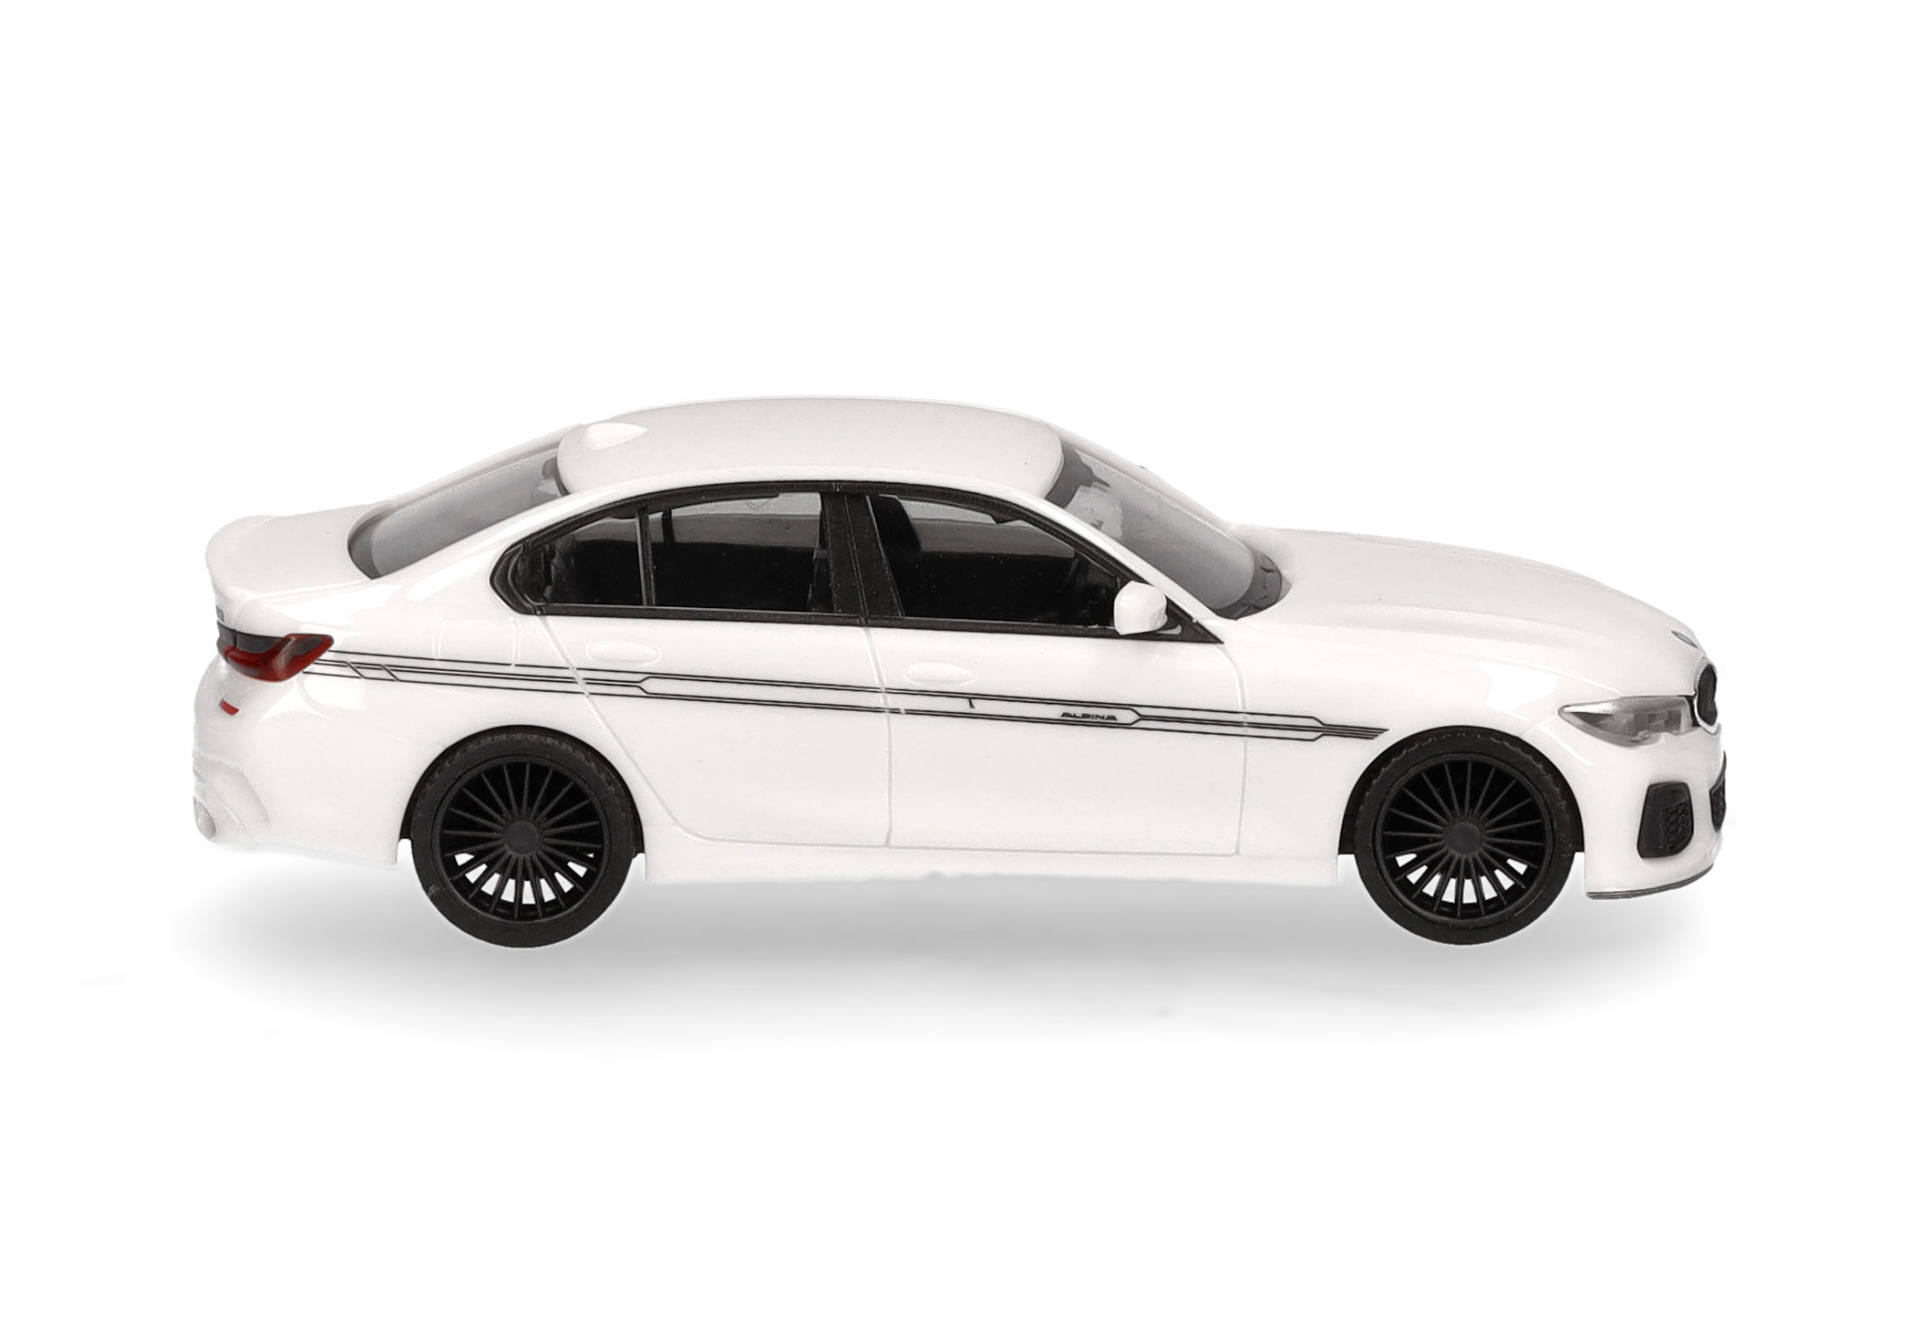 BMW Alpina B3 sedan, white, black details